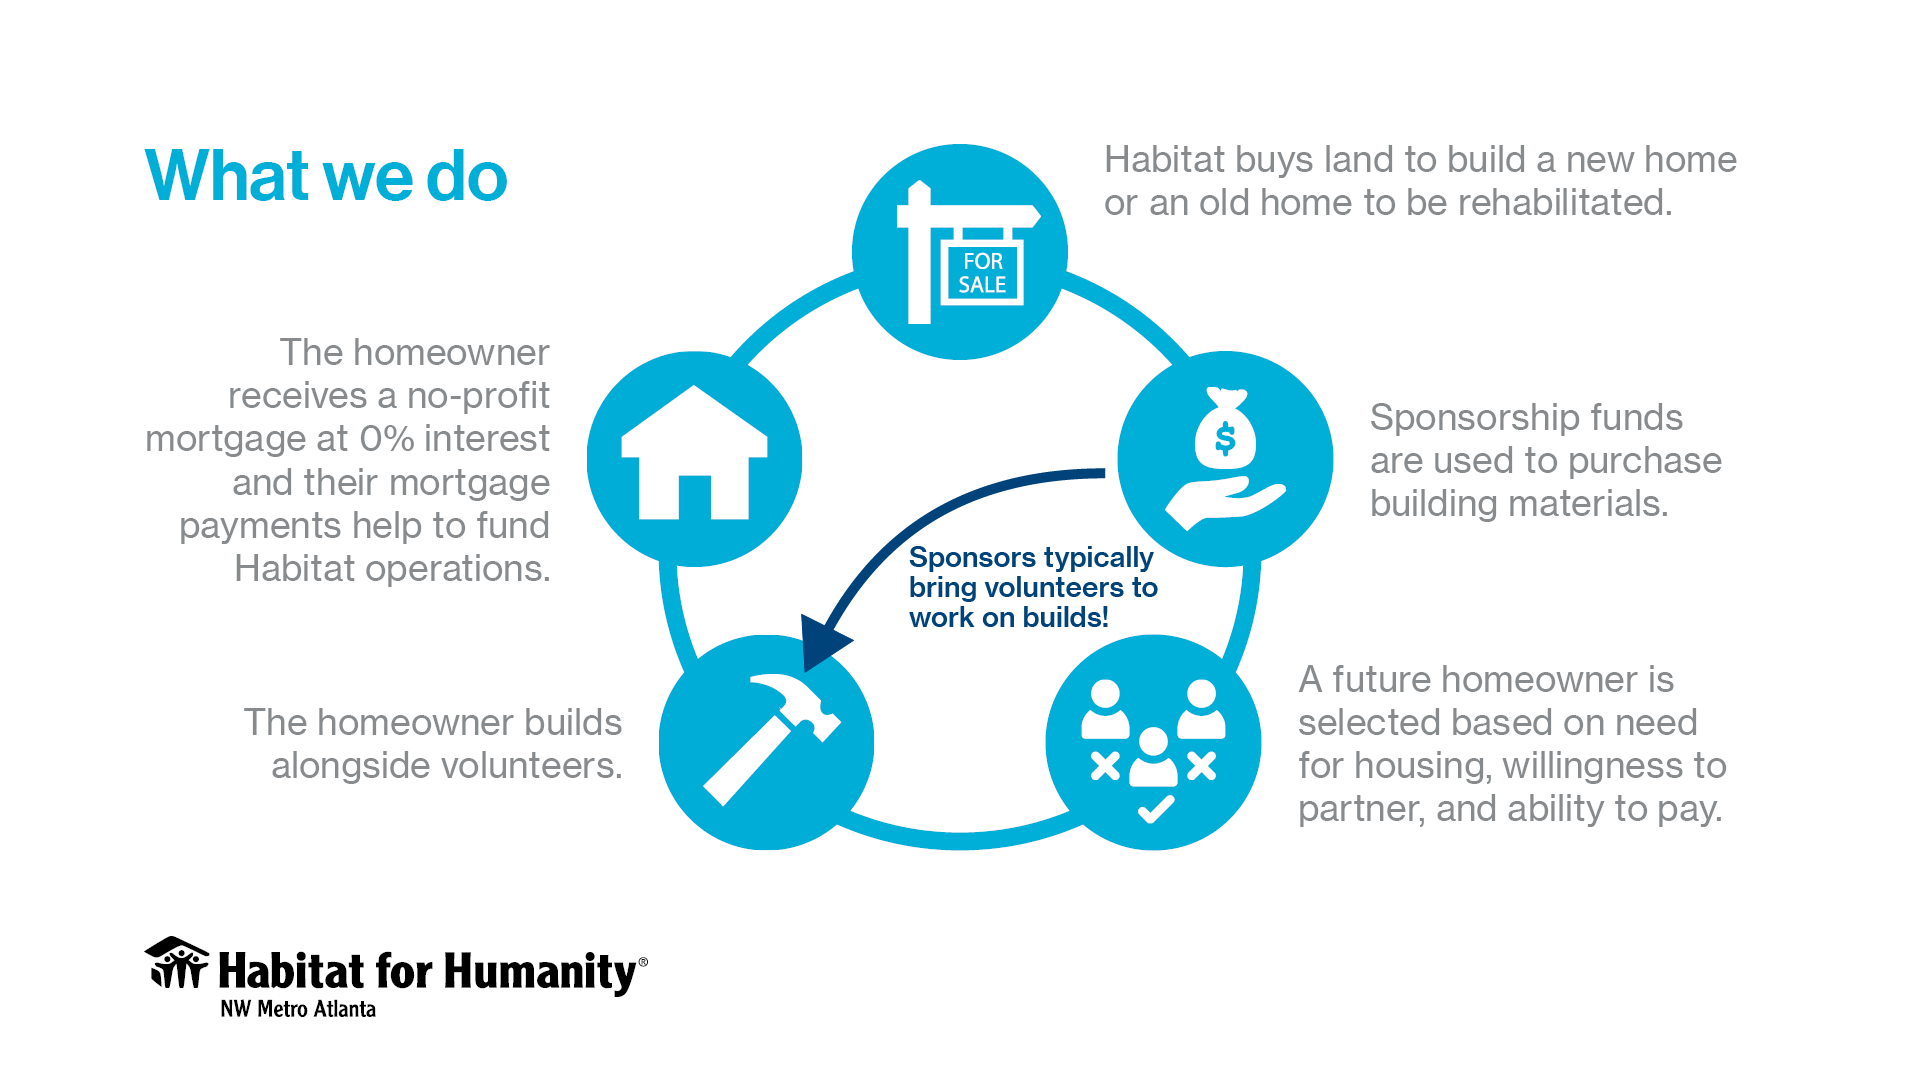 Habitat for Humanity's partnership housing model.